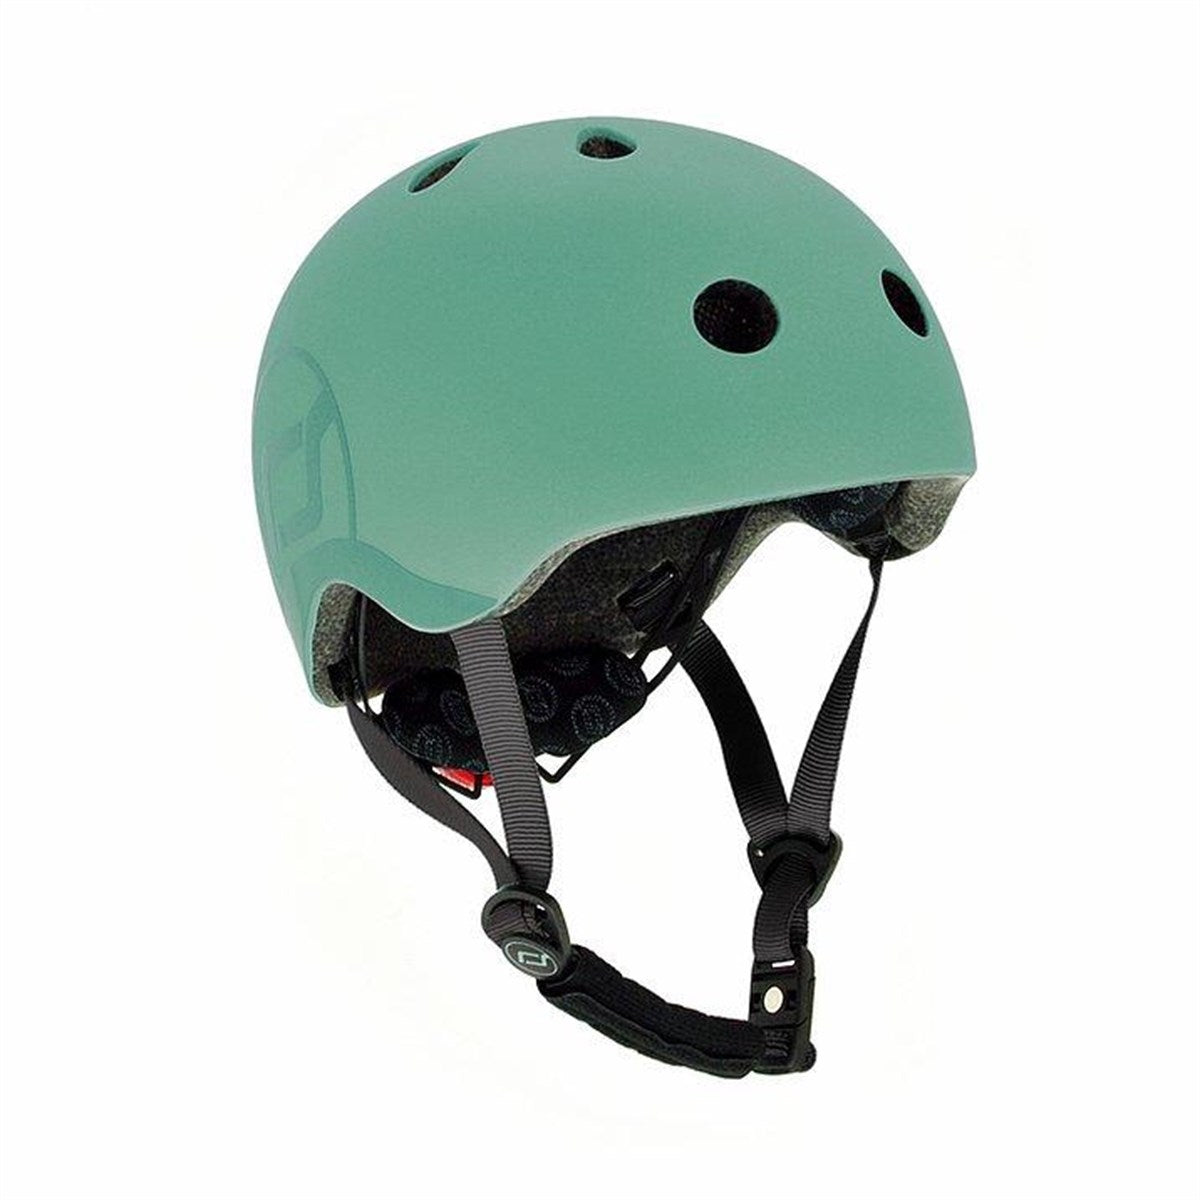 Scoot and Ride Helmet Çocuk Kaskı S-M Yeşil 190605-96366 | Toysall